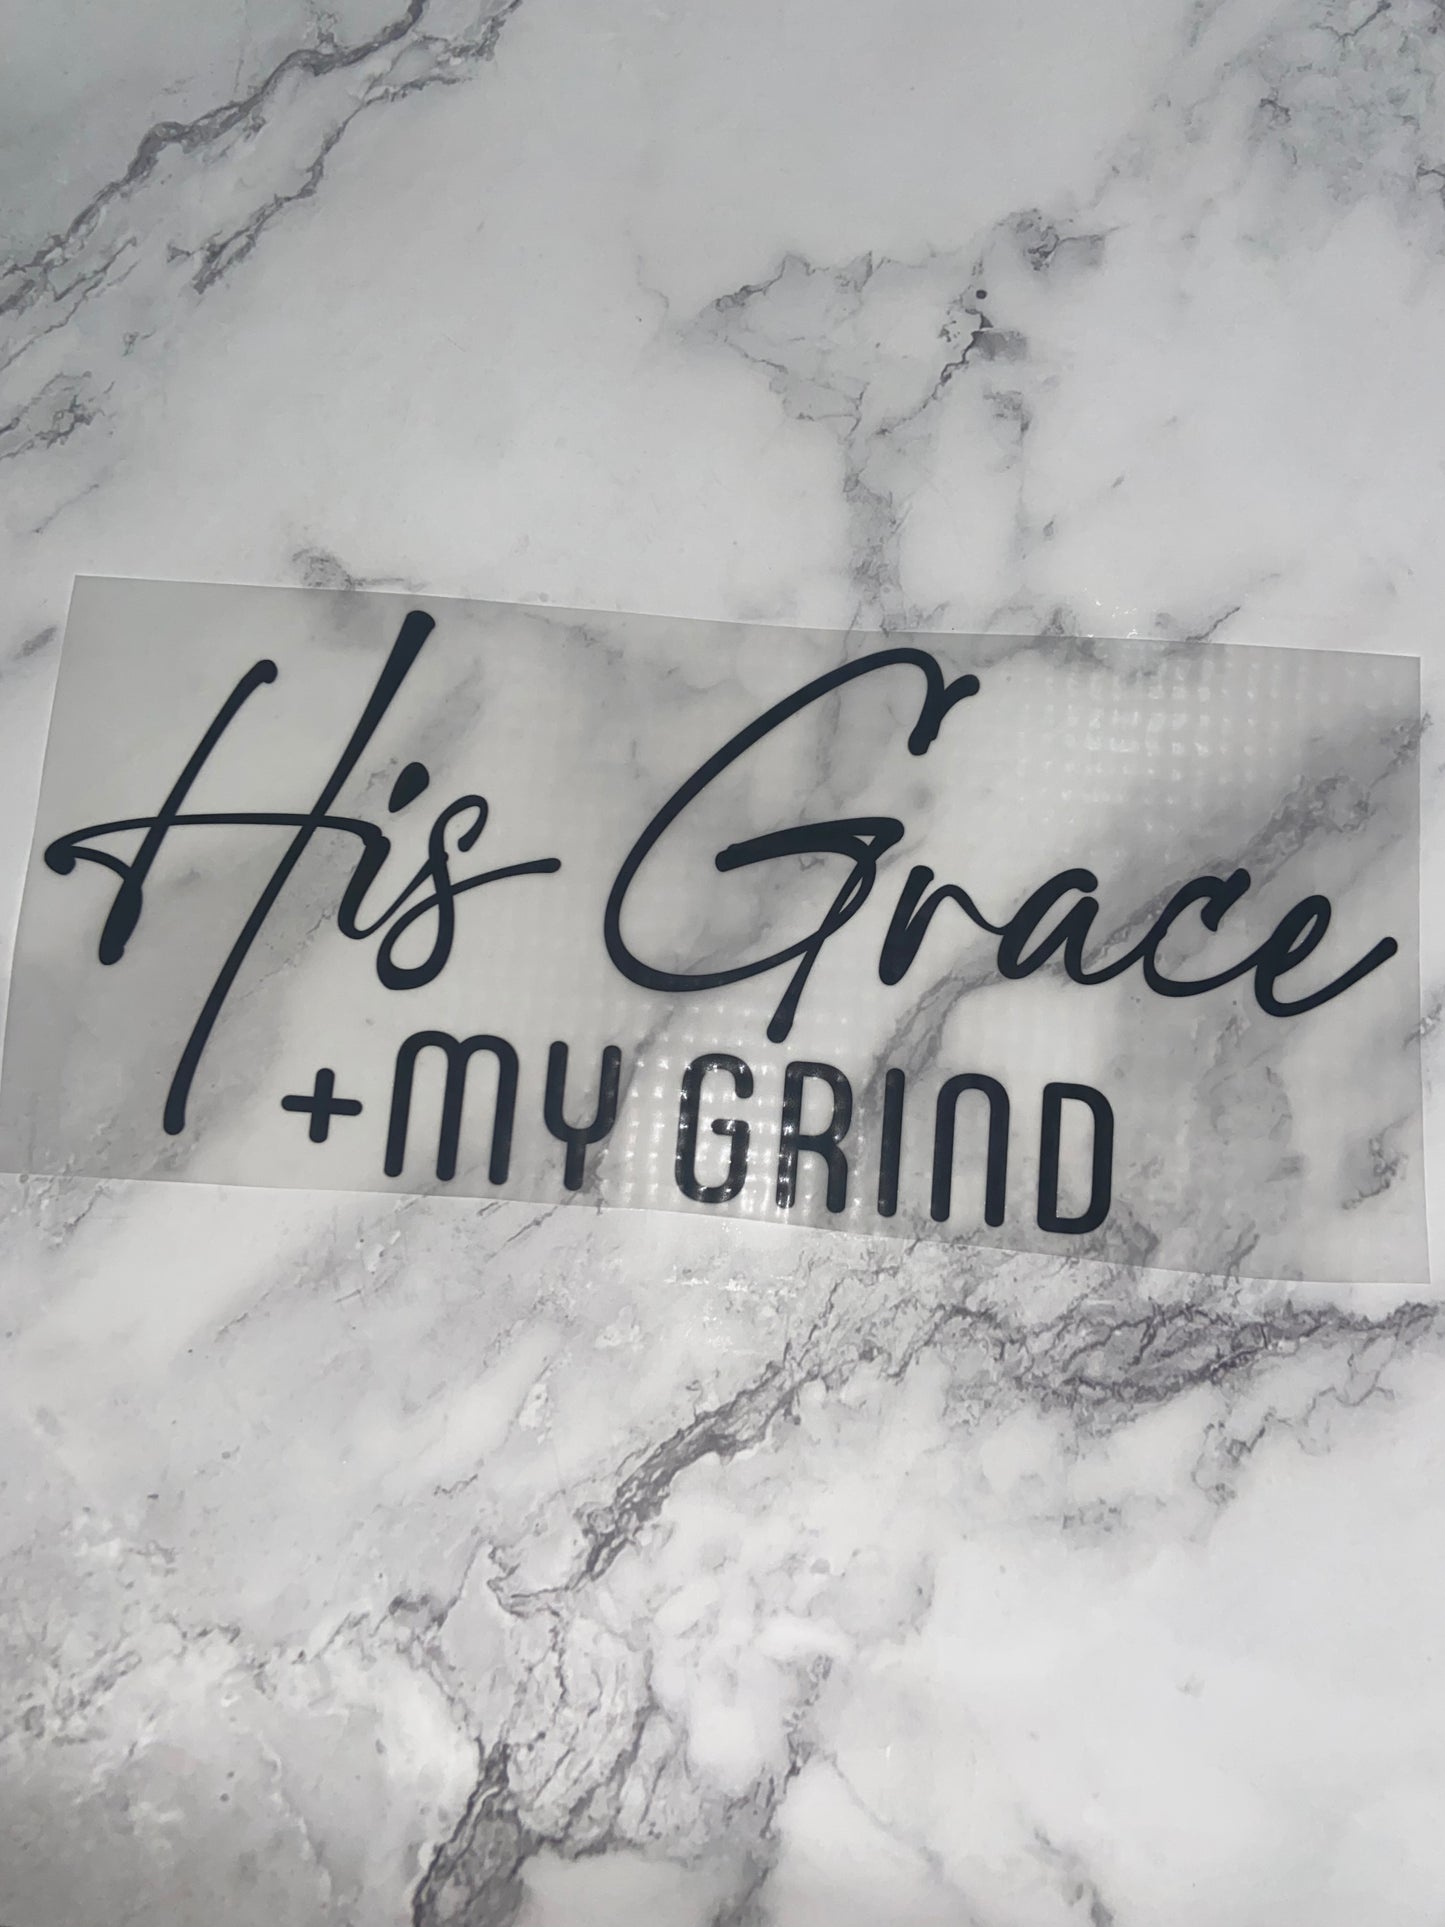 His grace + my grind print